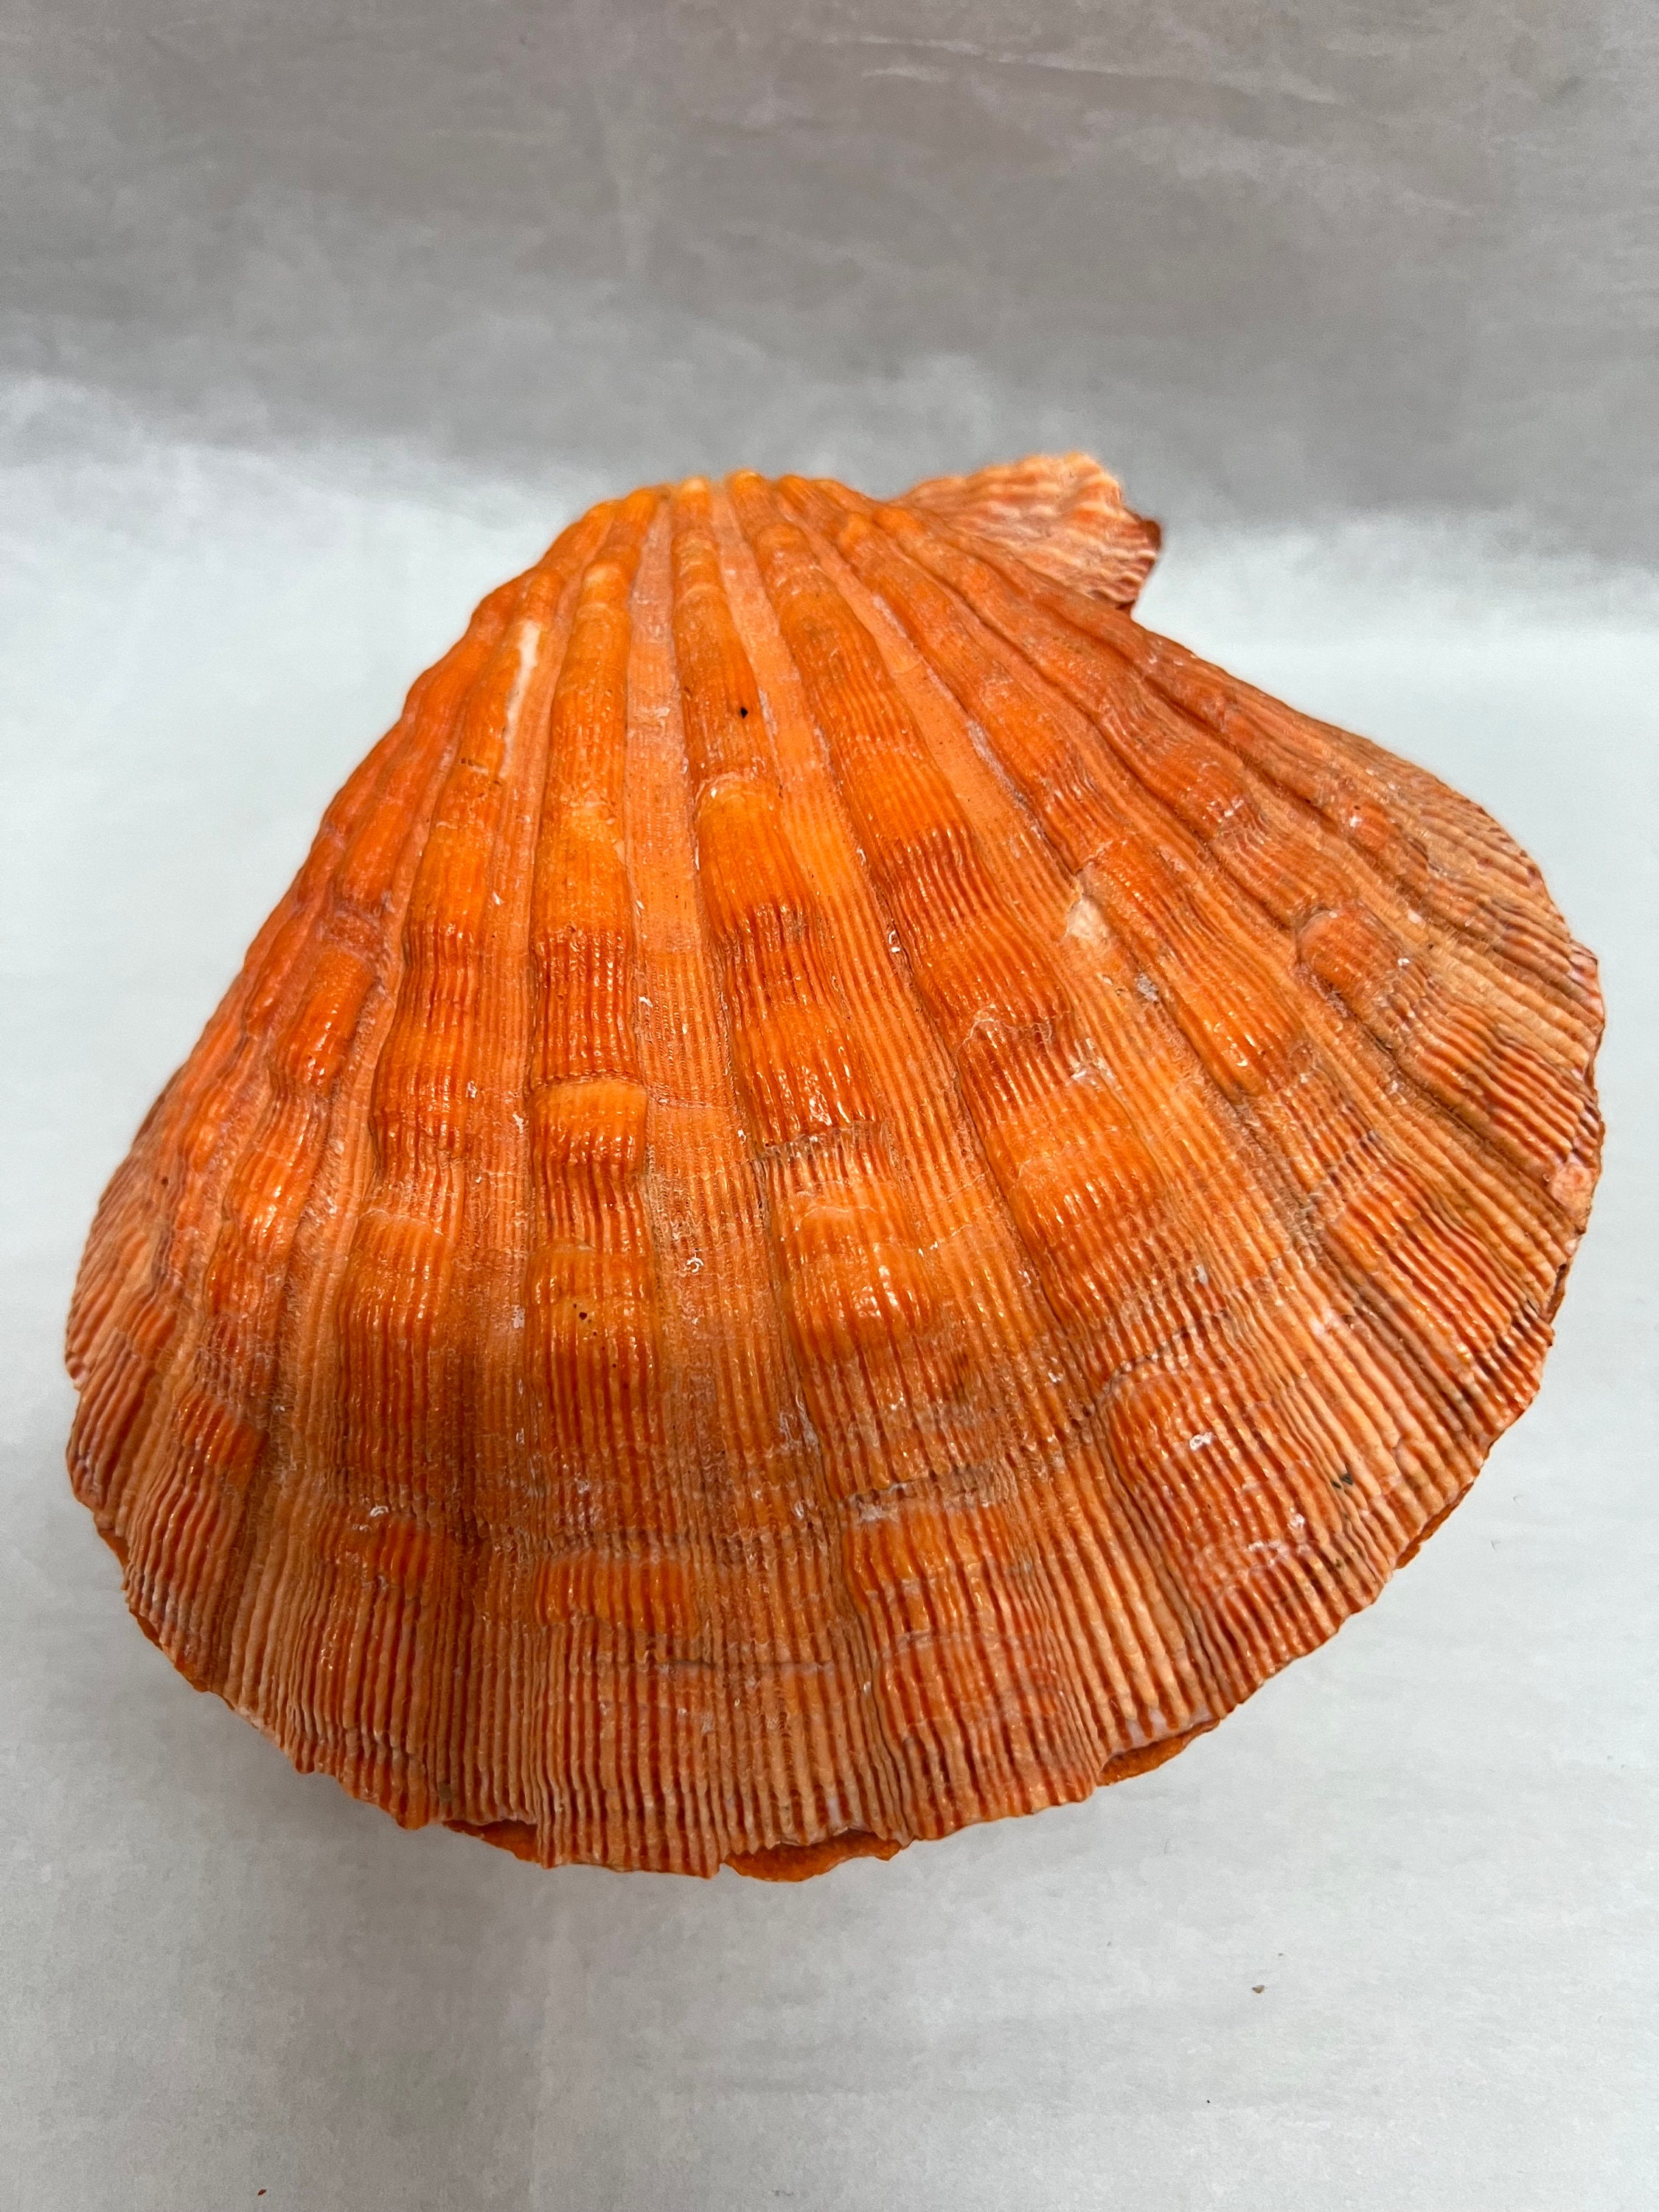 Natural Lions Paw Scallop Shell Large Seashells Coastal Home Decor Candles  Soap Dish Mermaid Costume DIY Bra Top Orange Yellow Rust Shells 